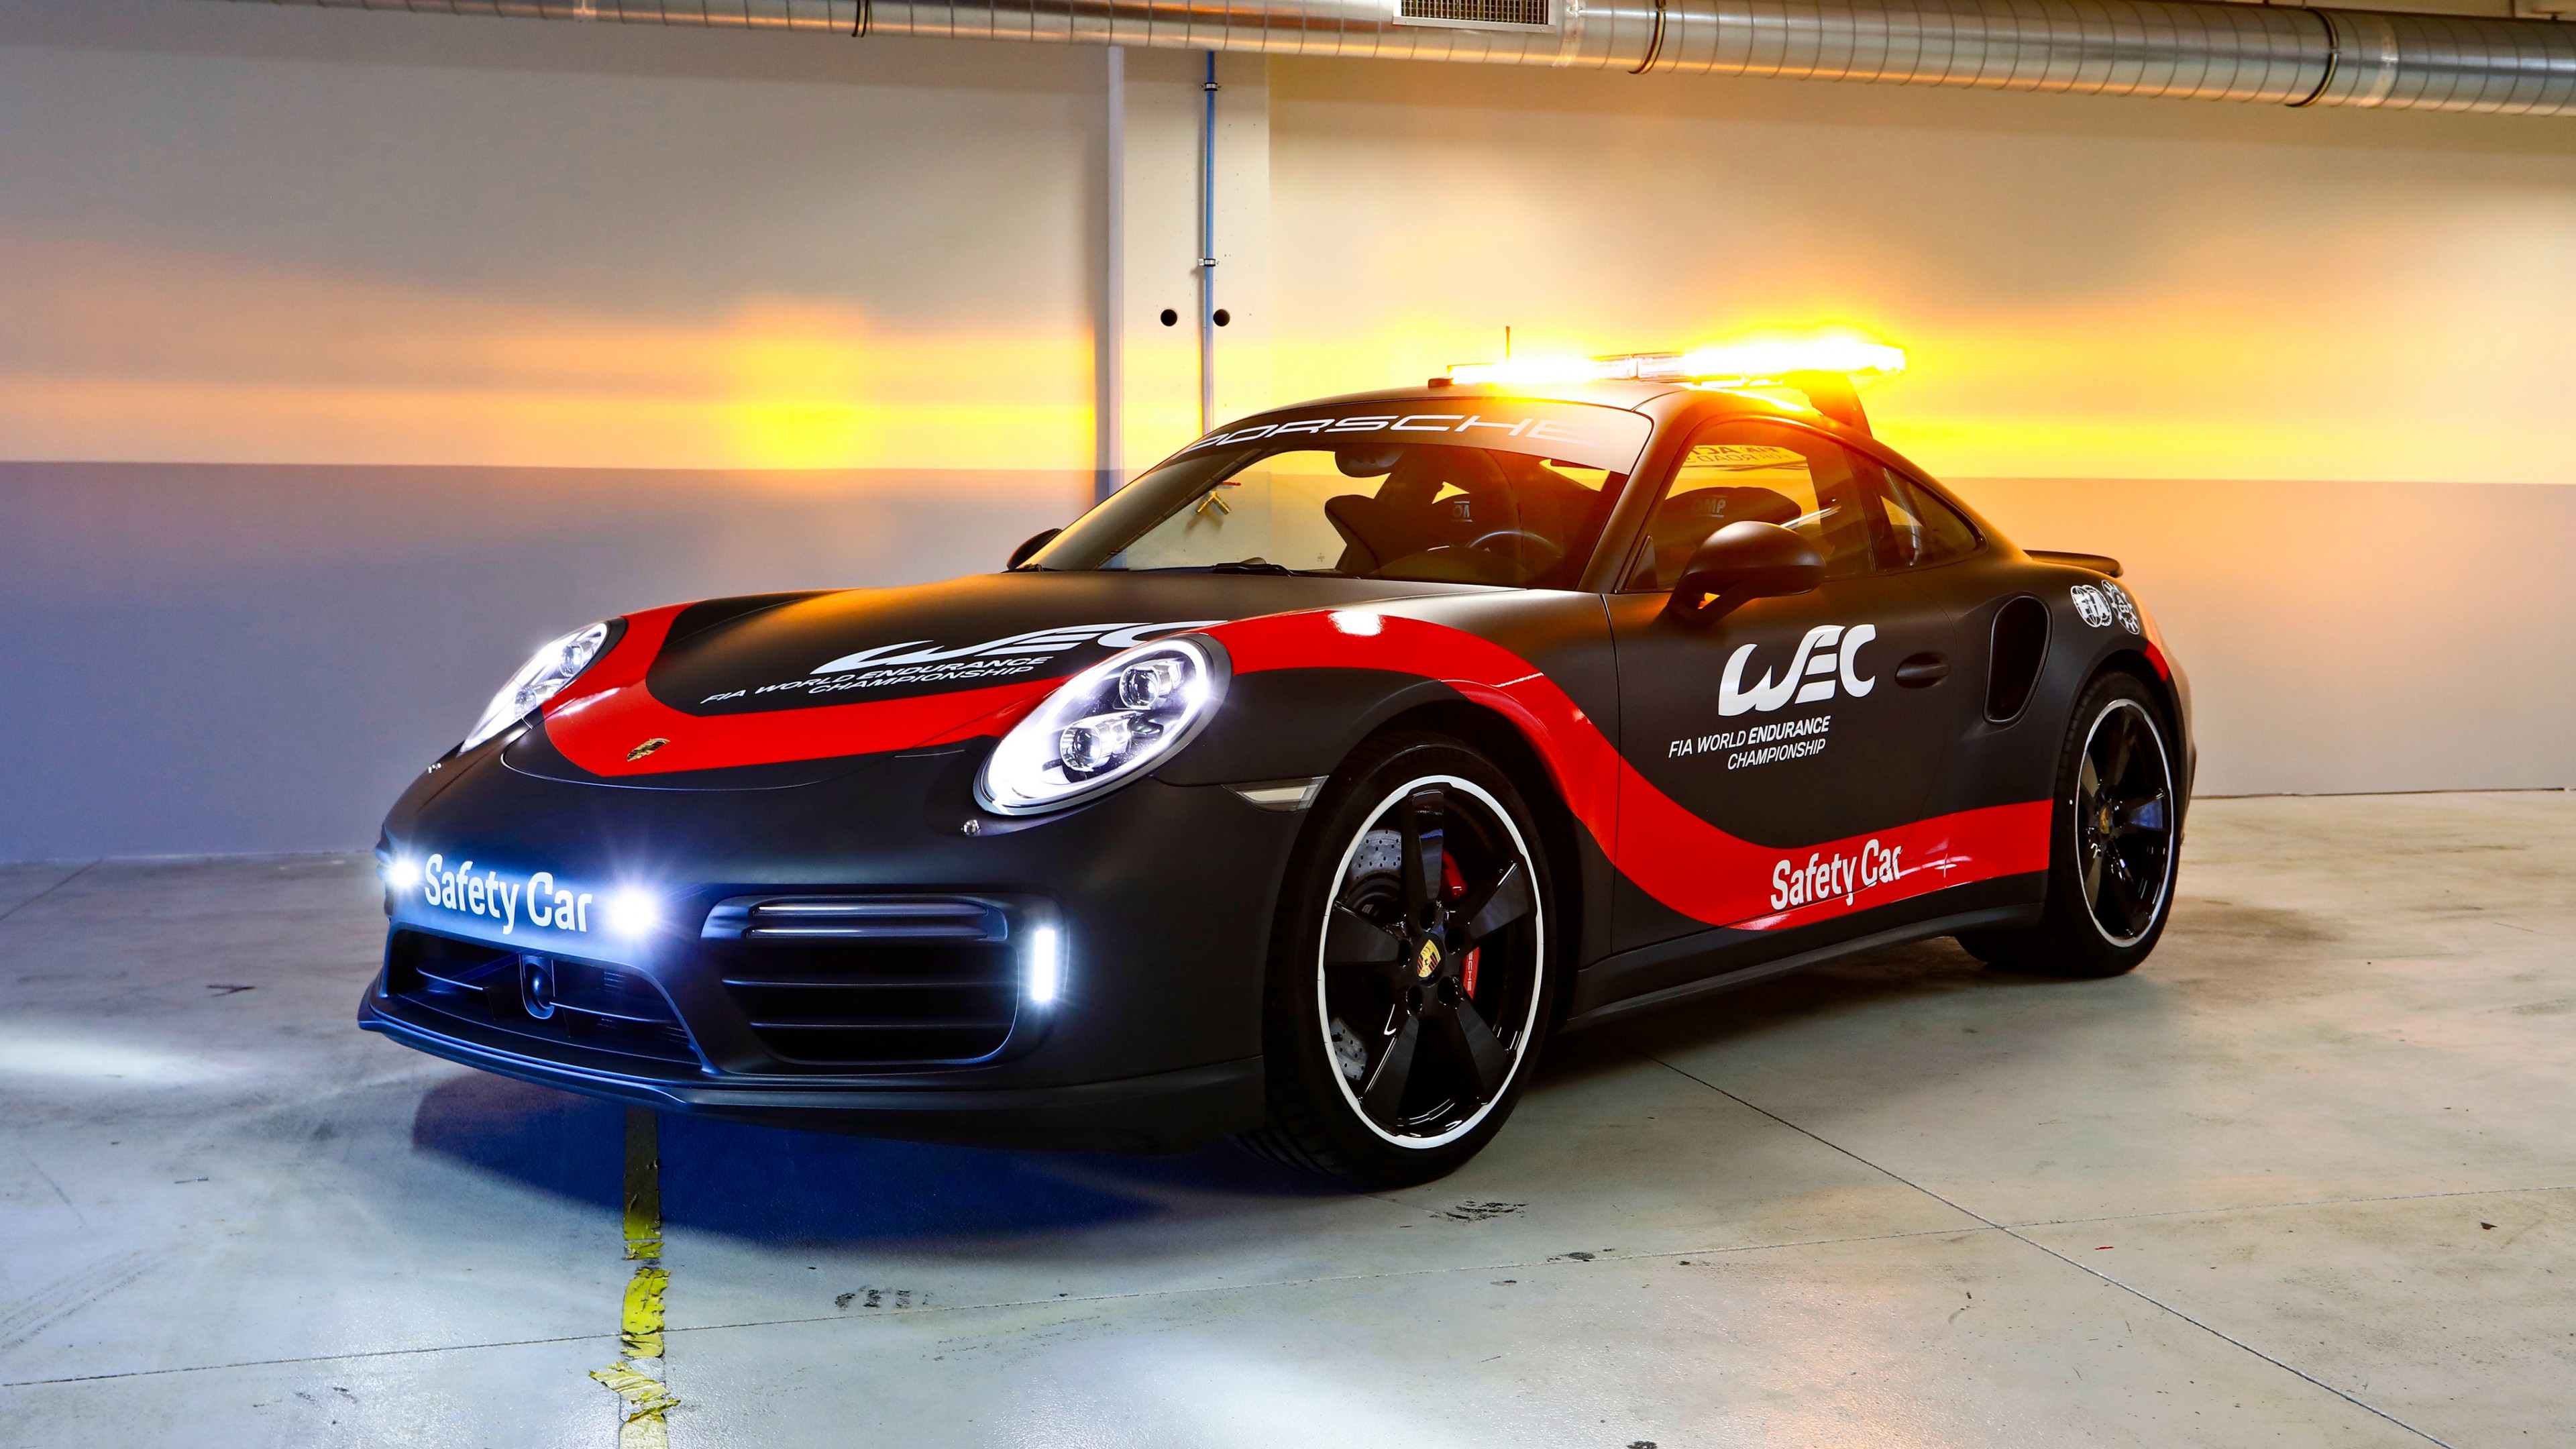 2018 Porsche 911 Turbo WEC Safety Car 4K Wallpapers